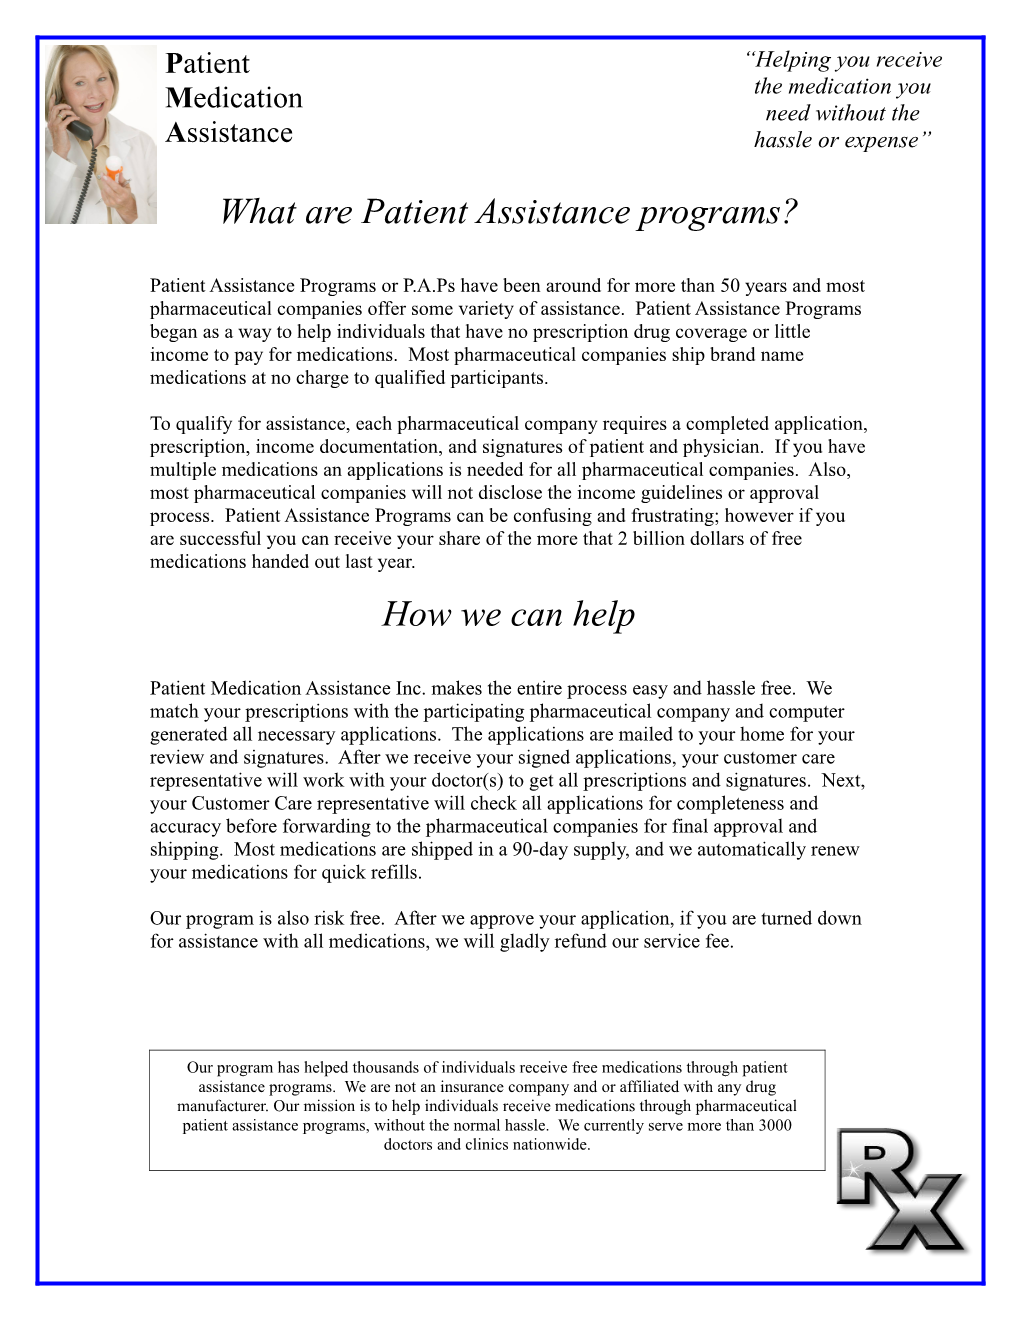 What Are Patient Assistance Programs?